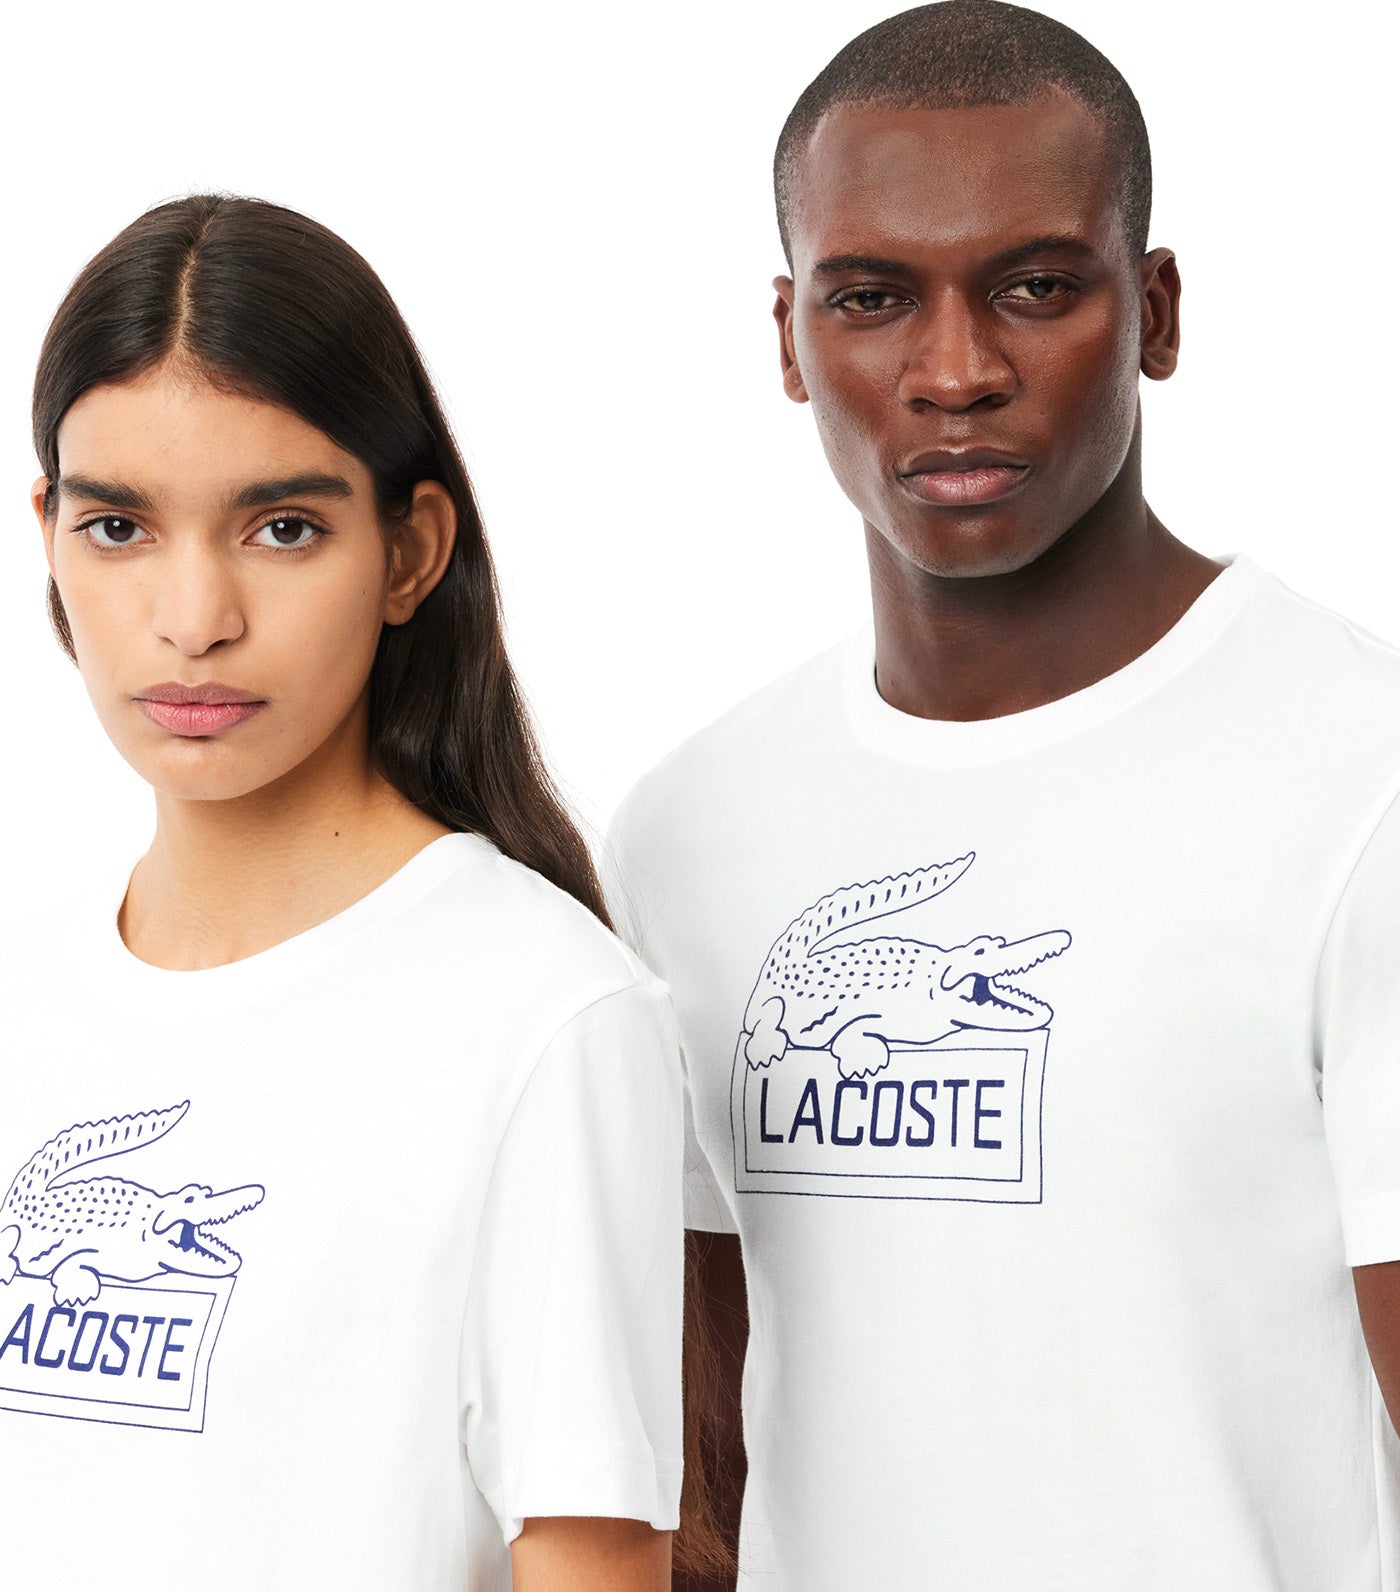 Ultra-Dry Sport Roland Garros Edition Tennis T-Shirt White